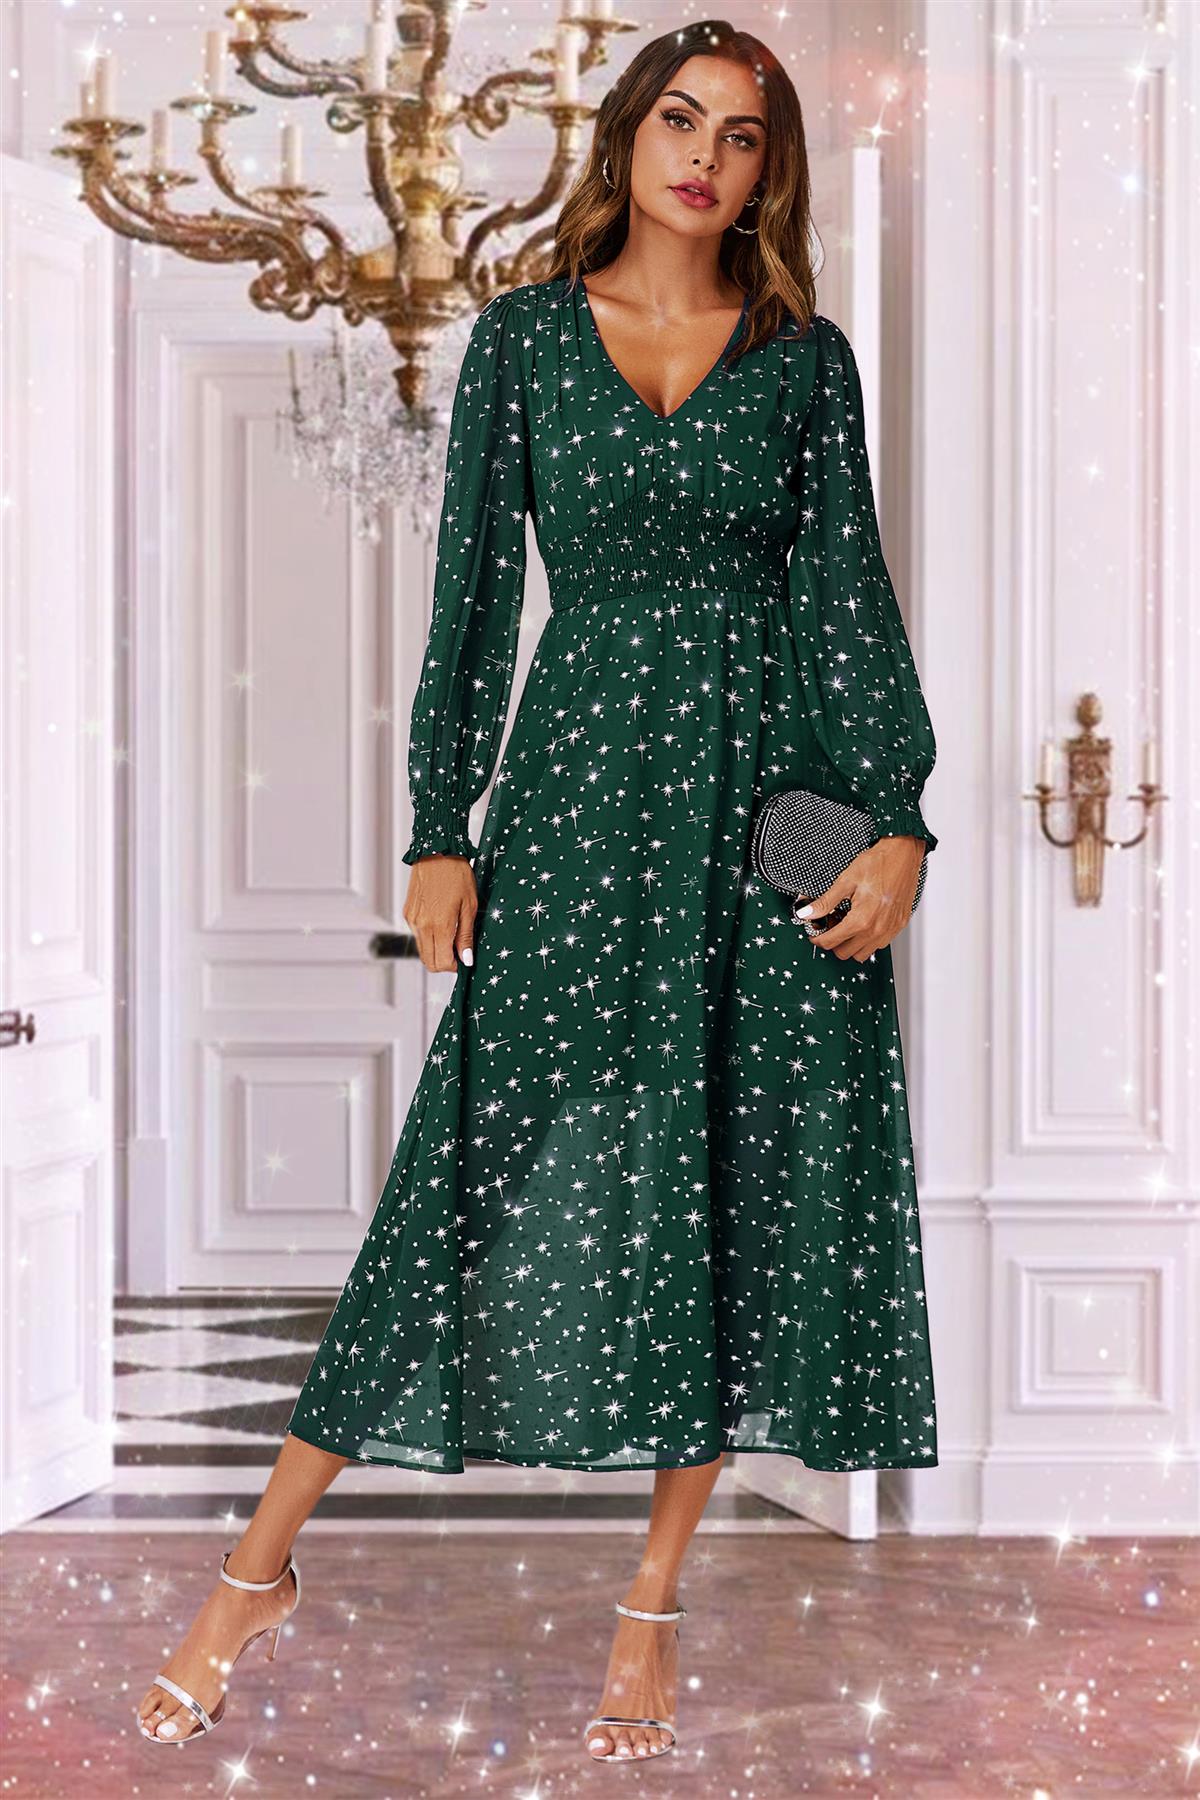 Silver Star Foil Long Sleeve Maxi Dress In Green FS629-GreenStar